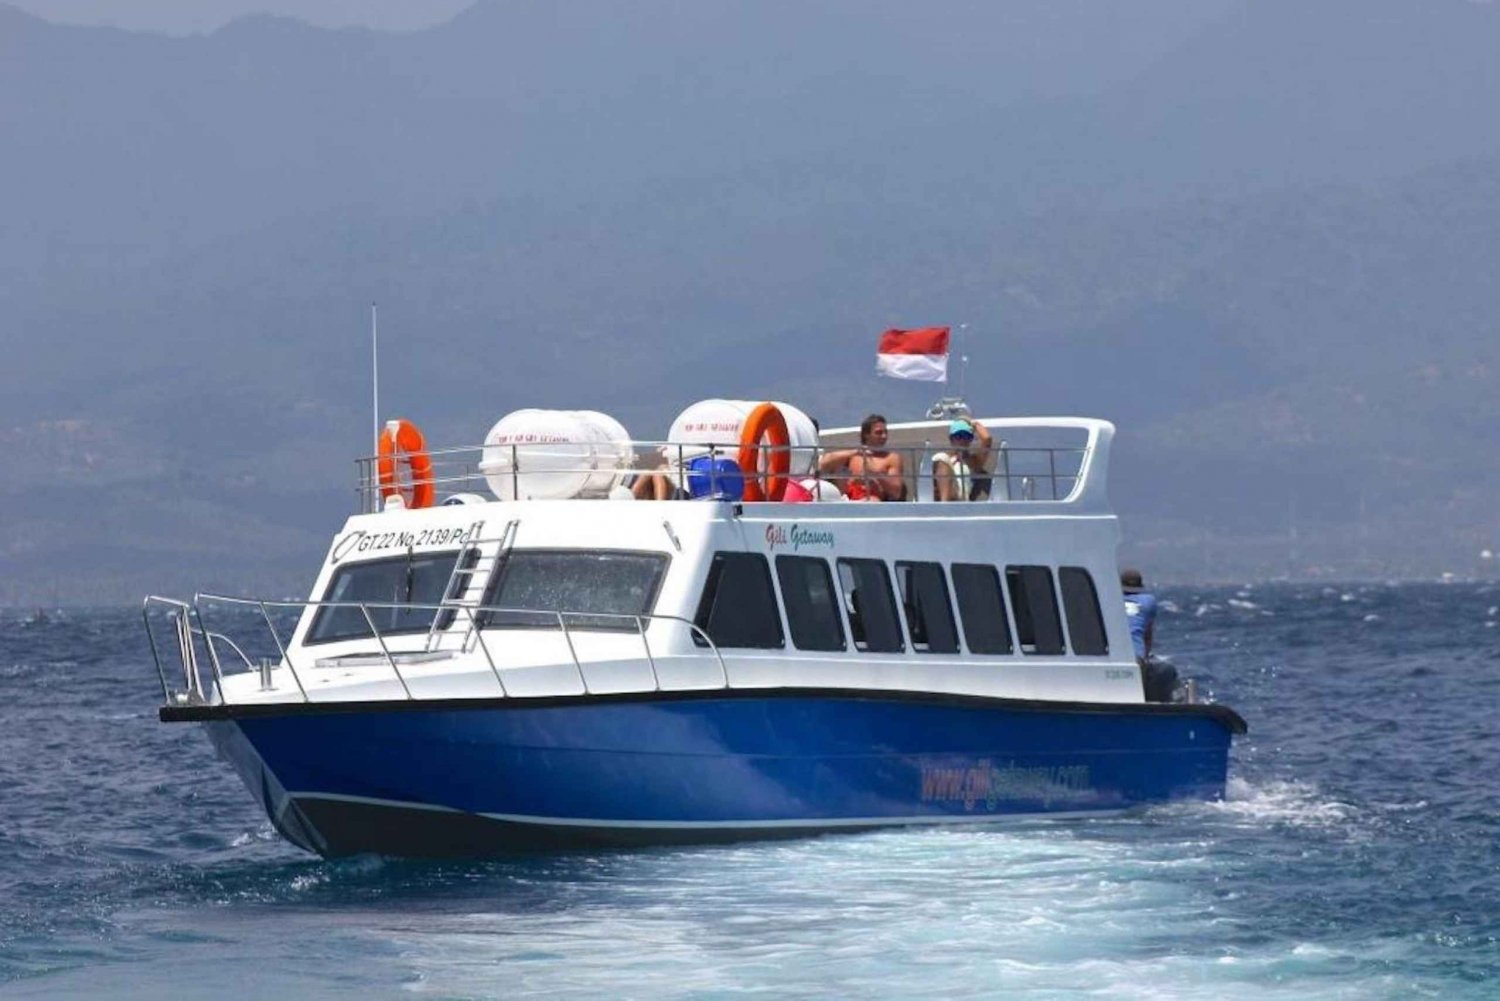 Bali and Nusa Penida: Fast Boat Transfers